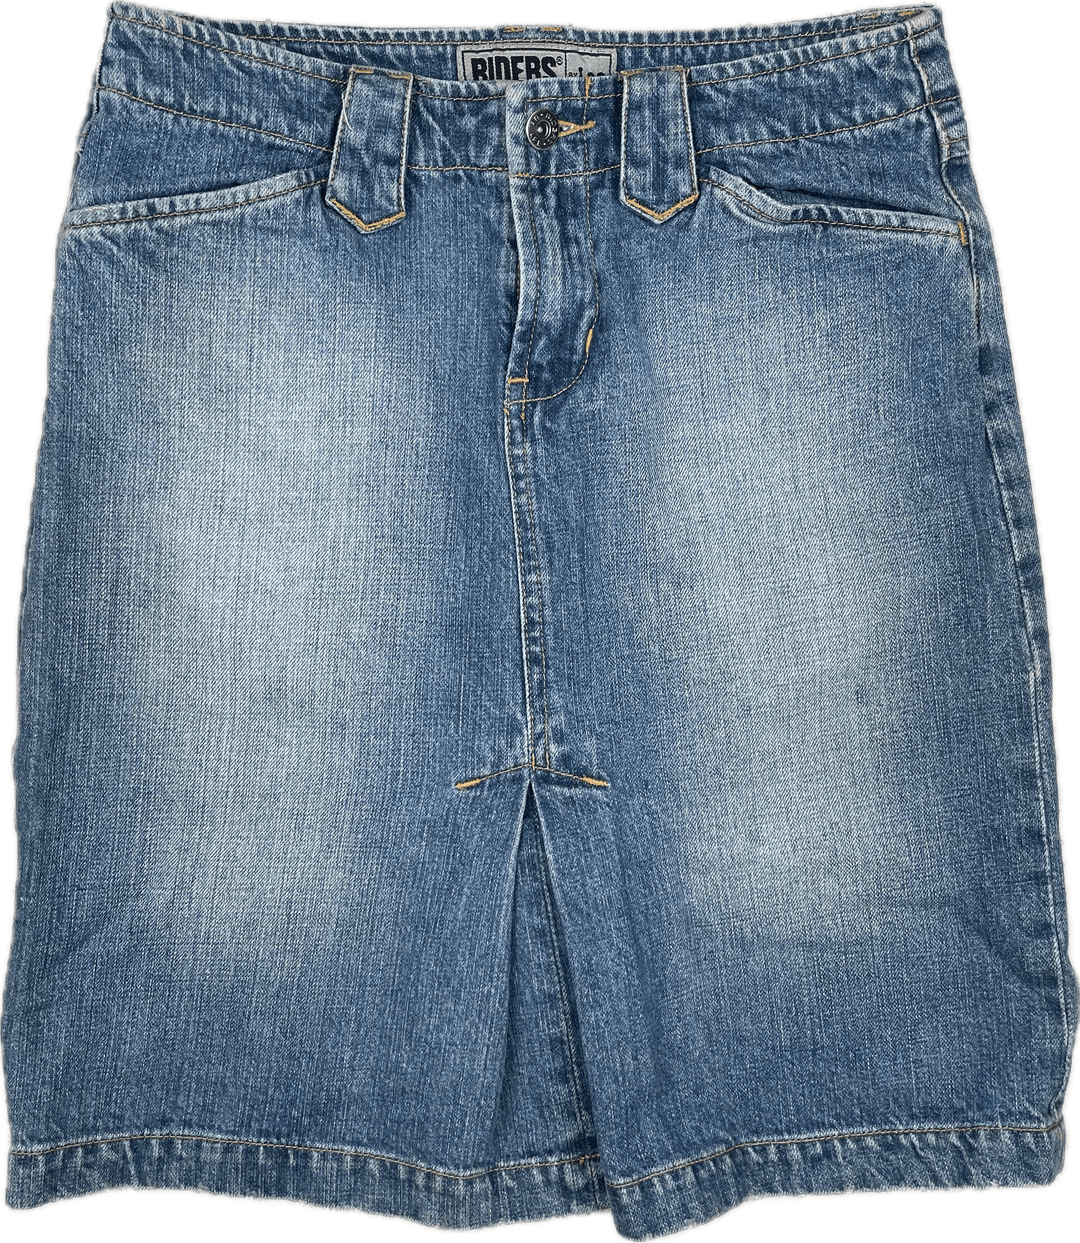 Lee Denim Pleat front Jeans Skirt - Size 8 - Jean Pool